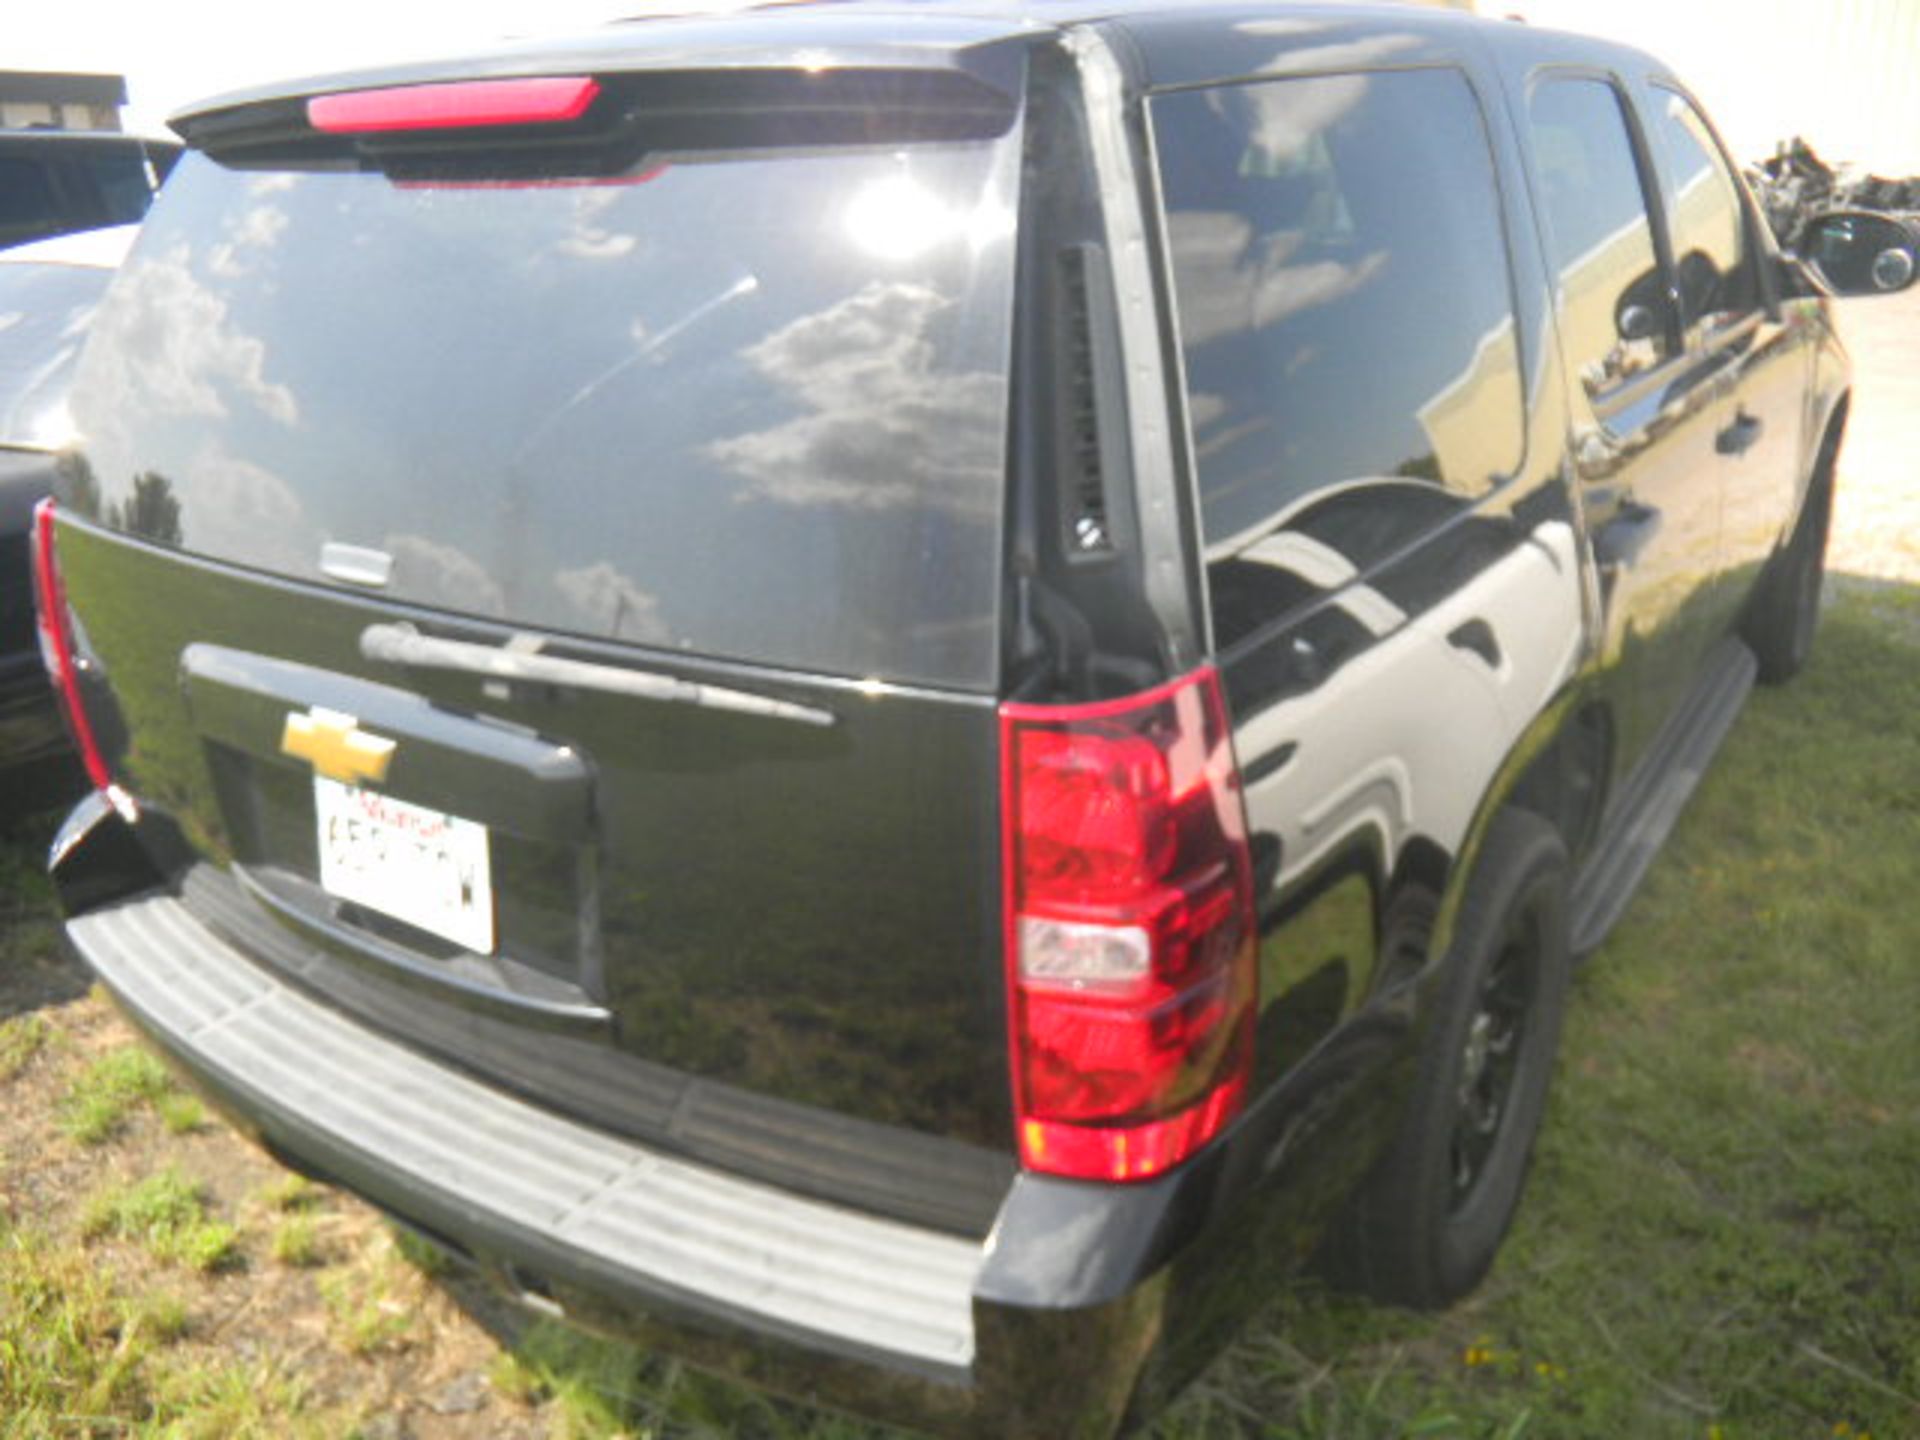 2013 Chevrolet Tahoe SUV Patrol Car - Asset I.D. #899 - Last of Vin (284825) - Image 4 of 7